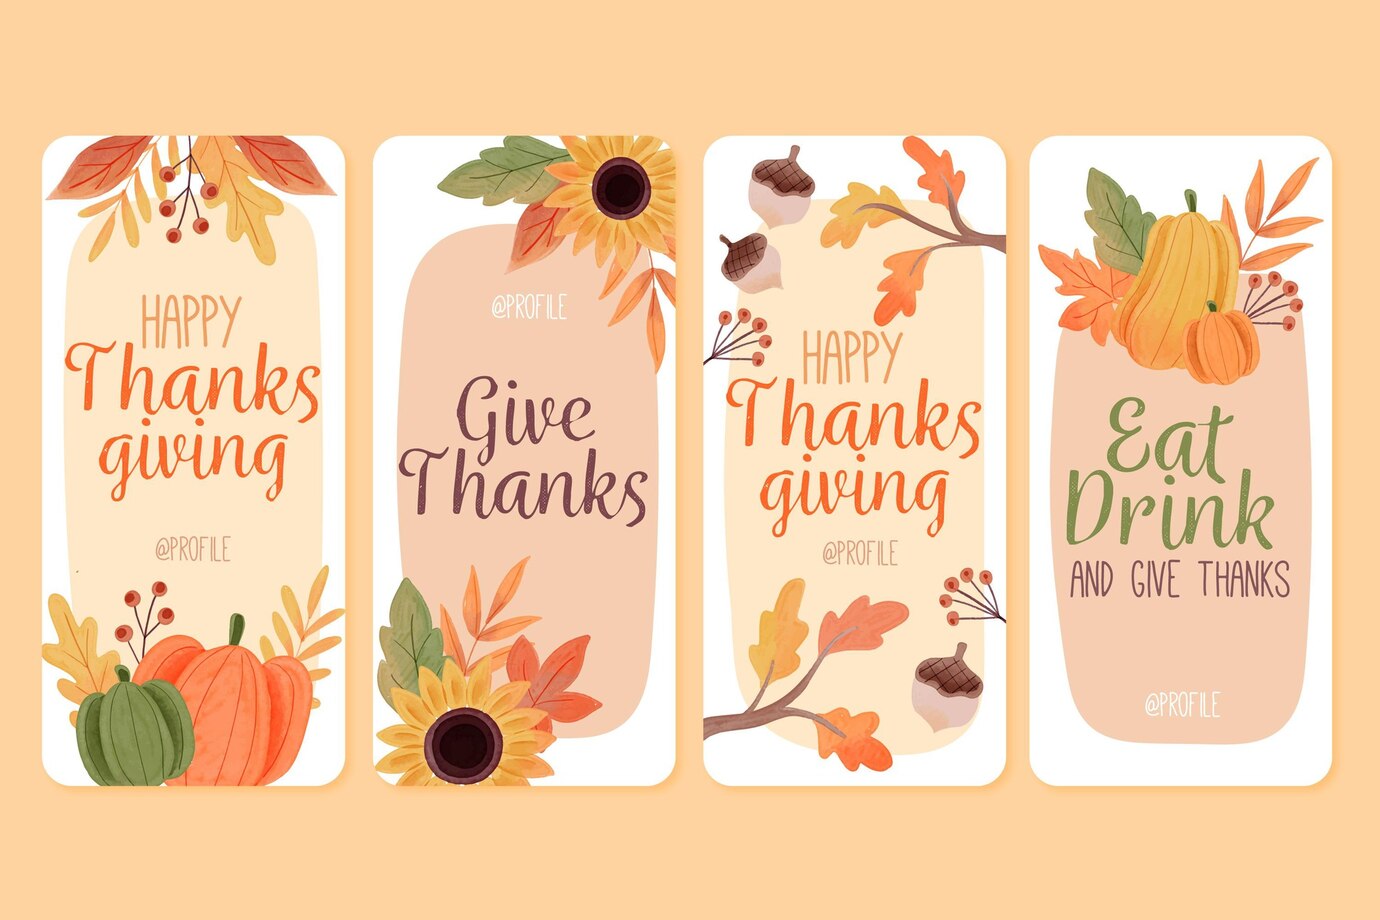 Watercolor Thanksgiving Instagram Stories 52683 47269